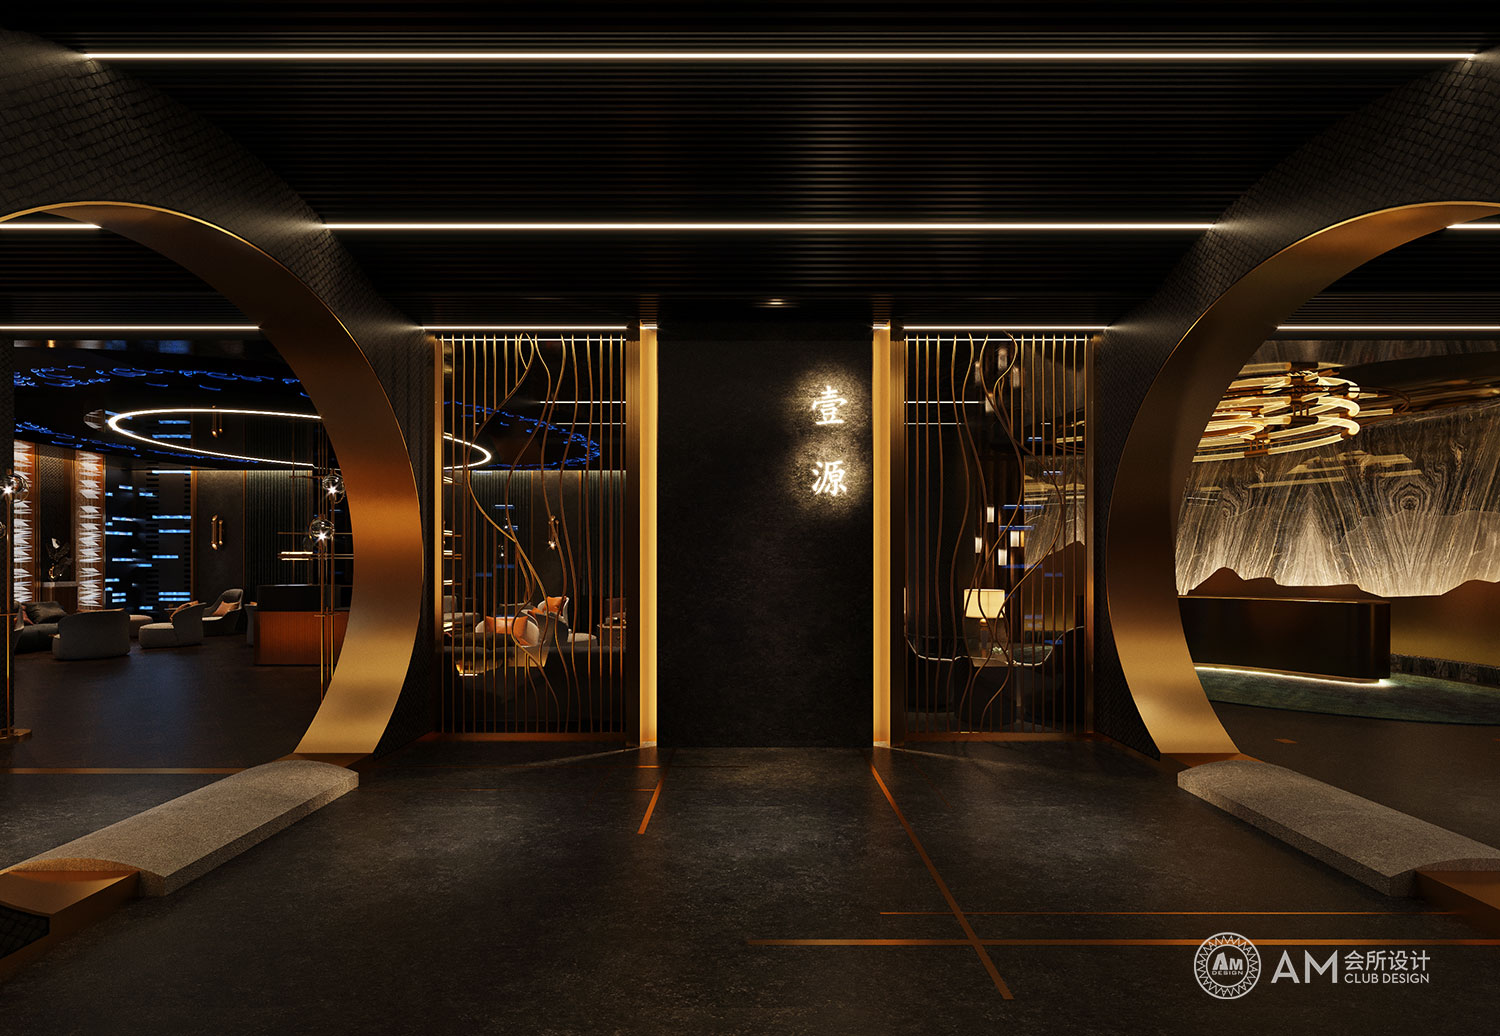 AM DESIGN | Hall design of lishiyuan Spa Club